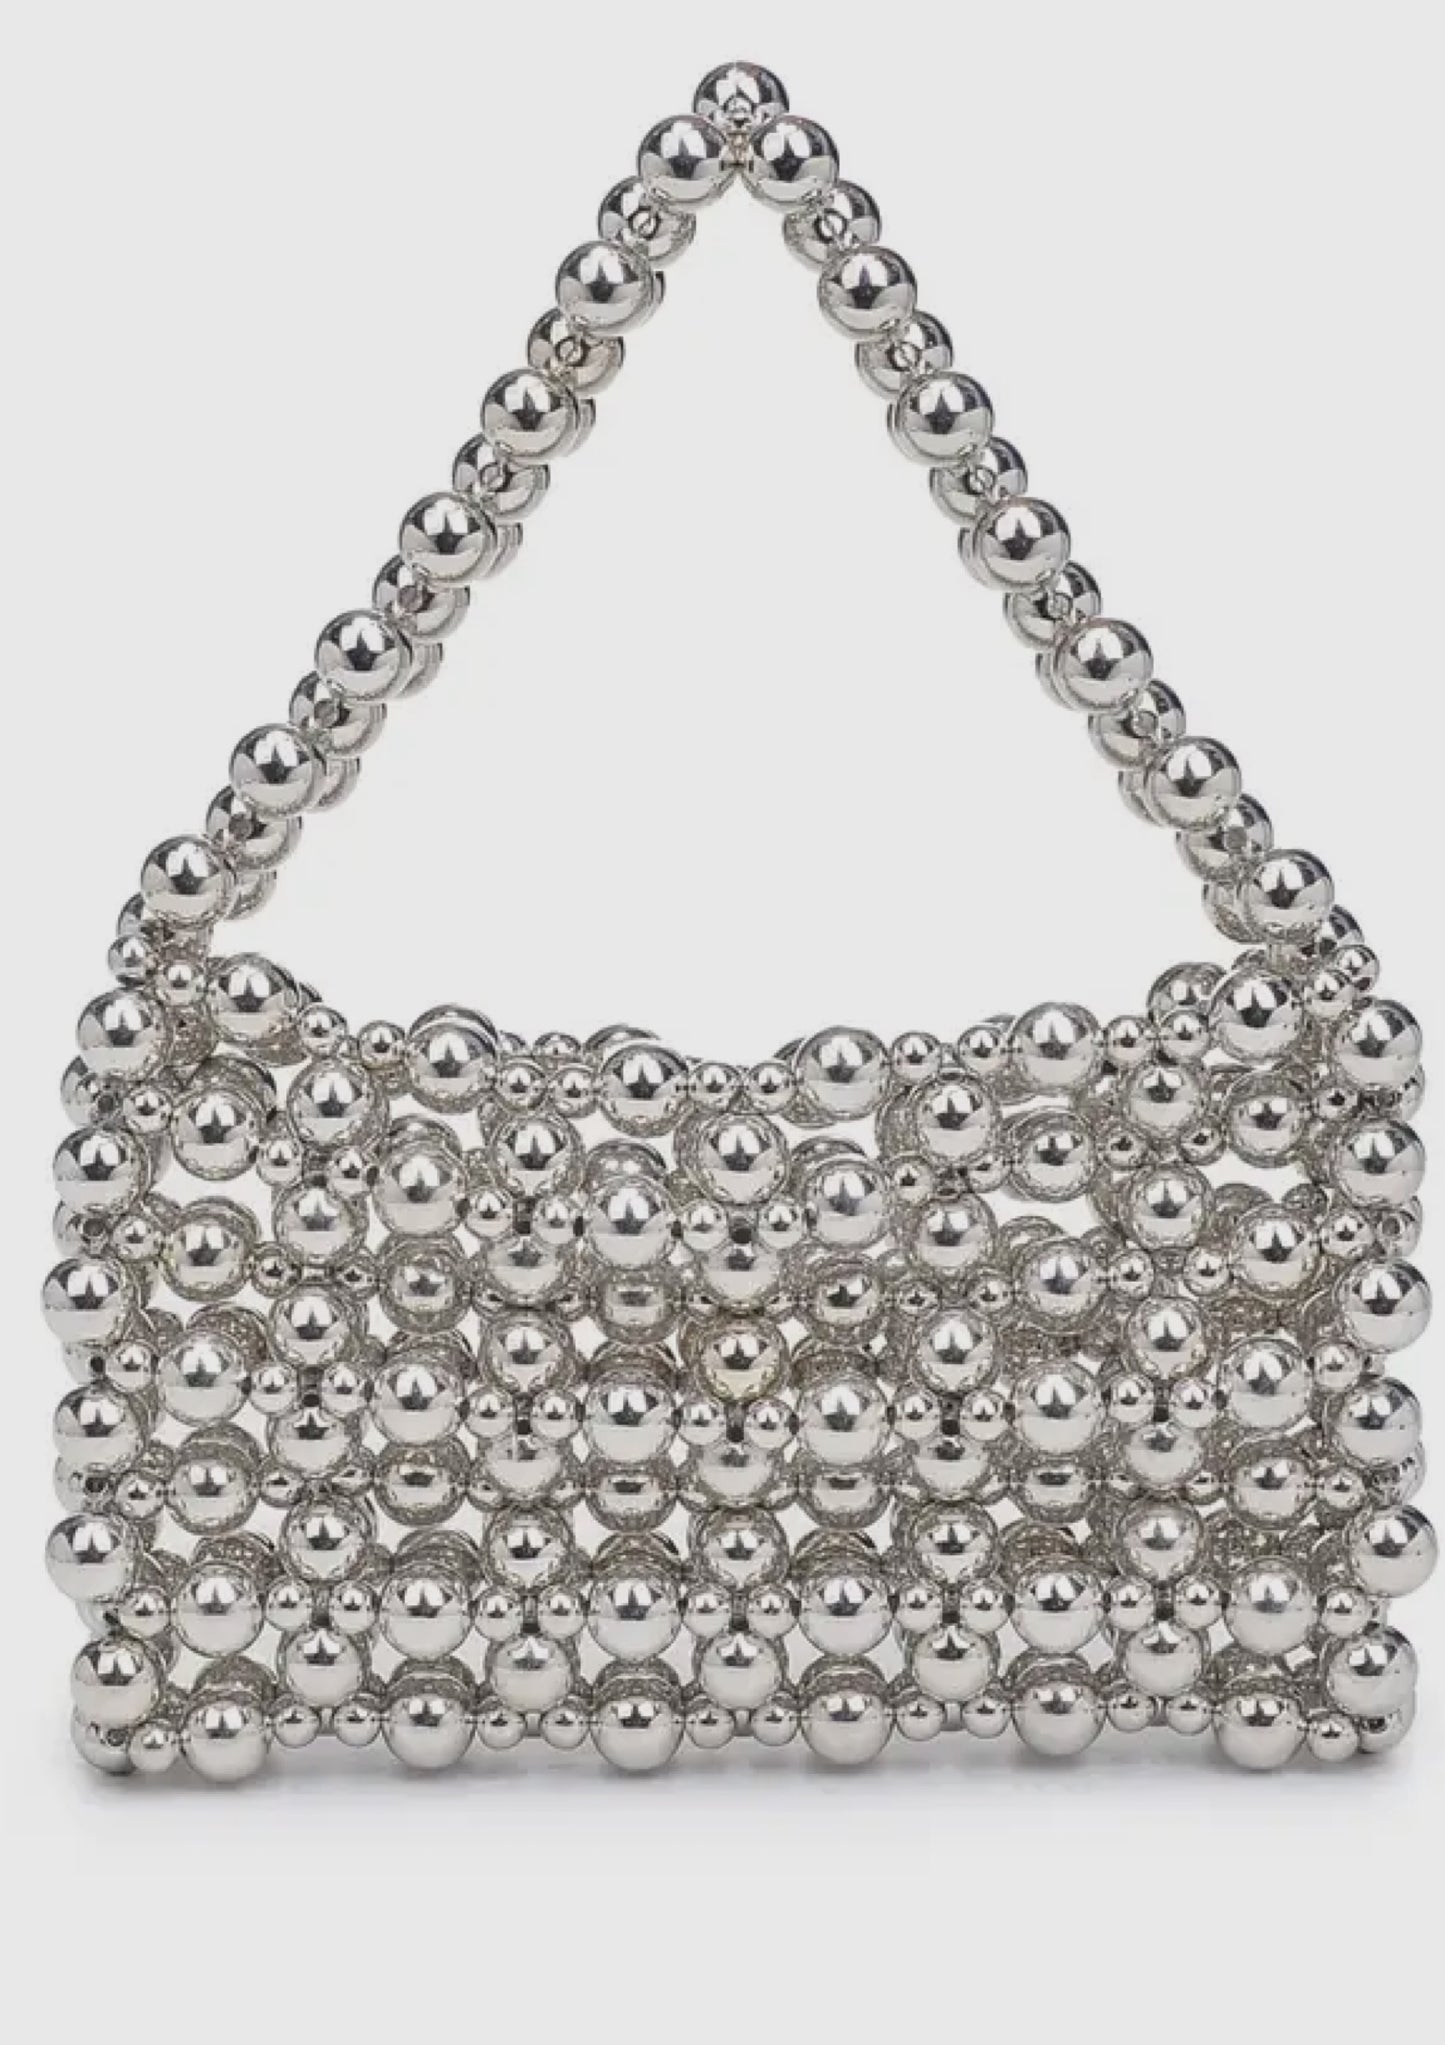 Simply cute bag of Beads